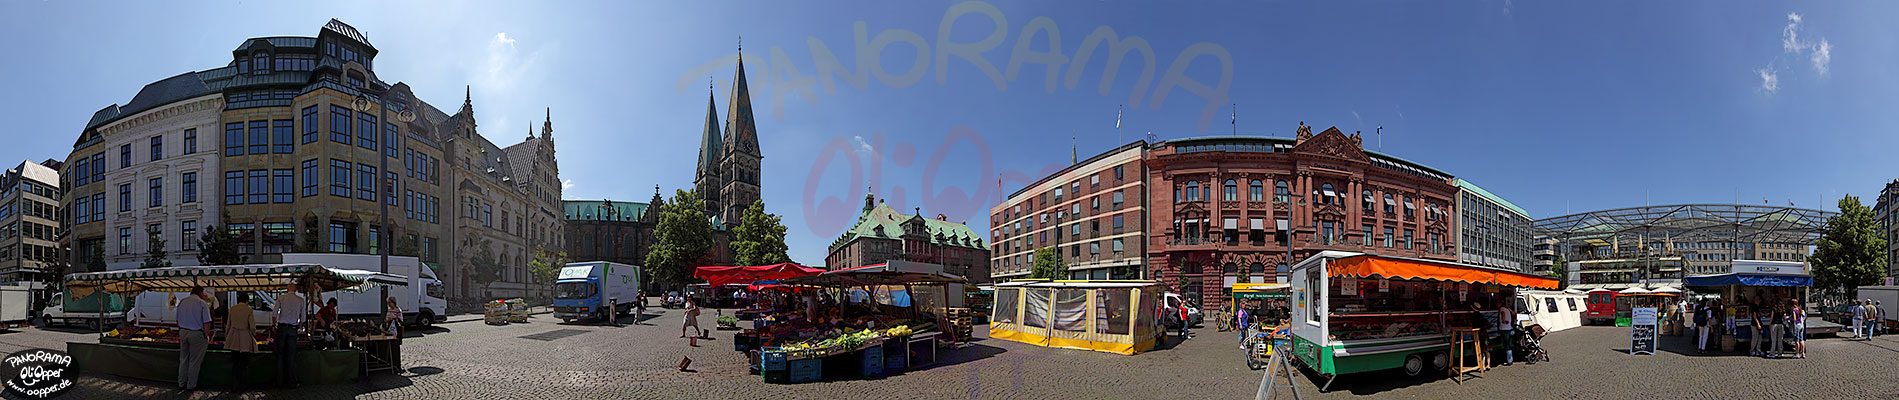 Panorama Bremen - Markt auf dem Domshof - p002 - (c) by Oliver Opper